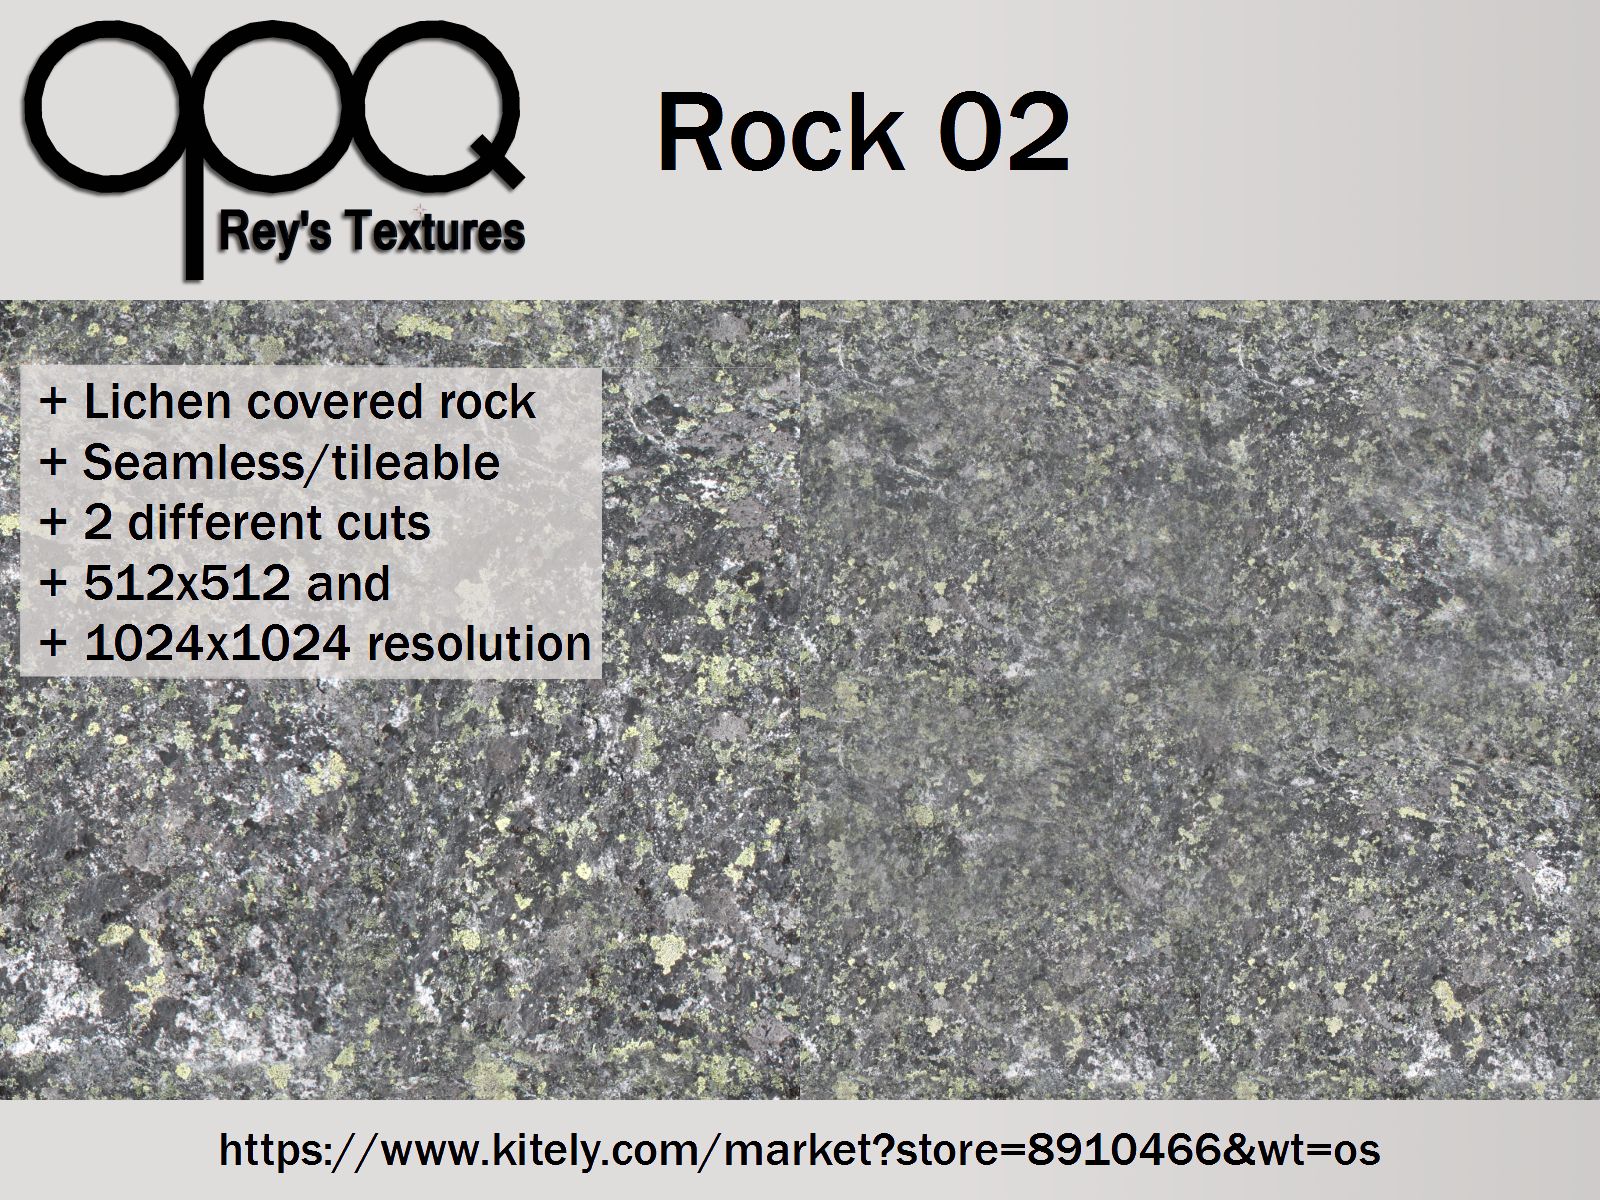 Rey's Rock 02 Poster Kitely.jpg